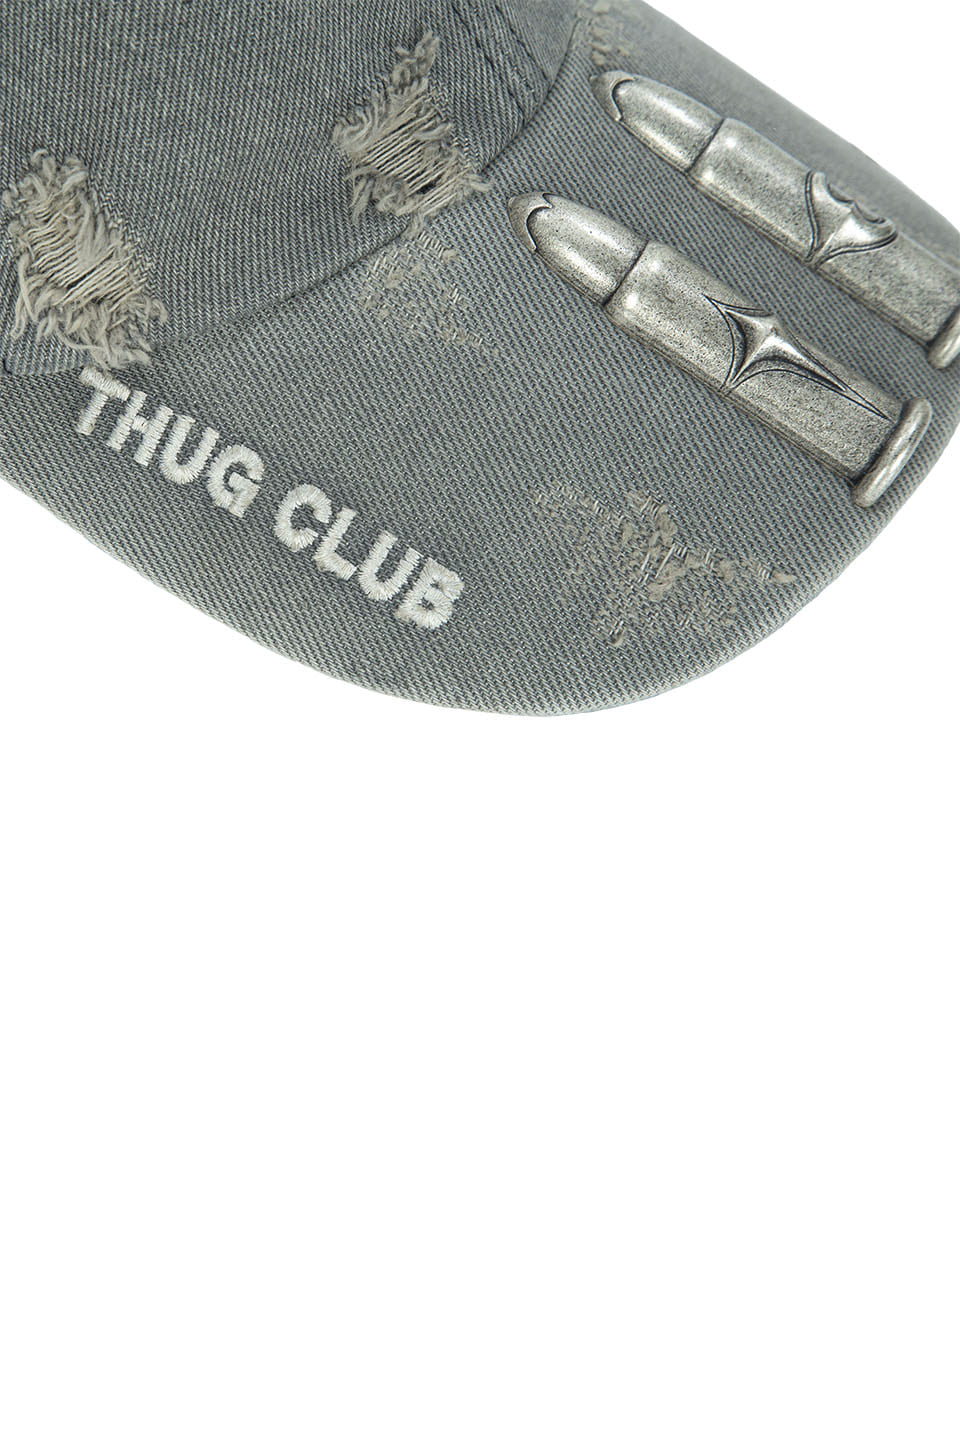 THUG CLUB TC LIFE CAP / BLK厳しいです - キャップ